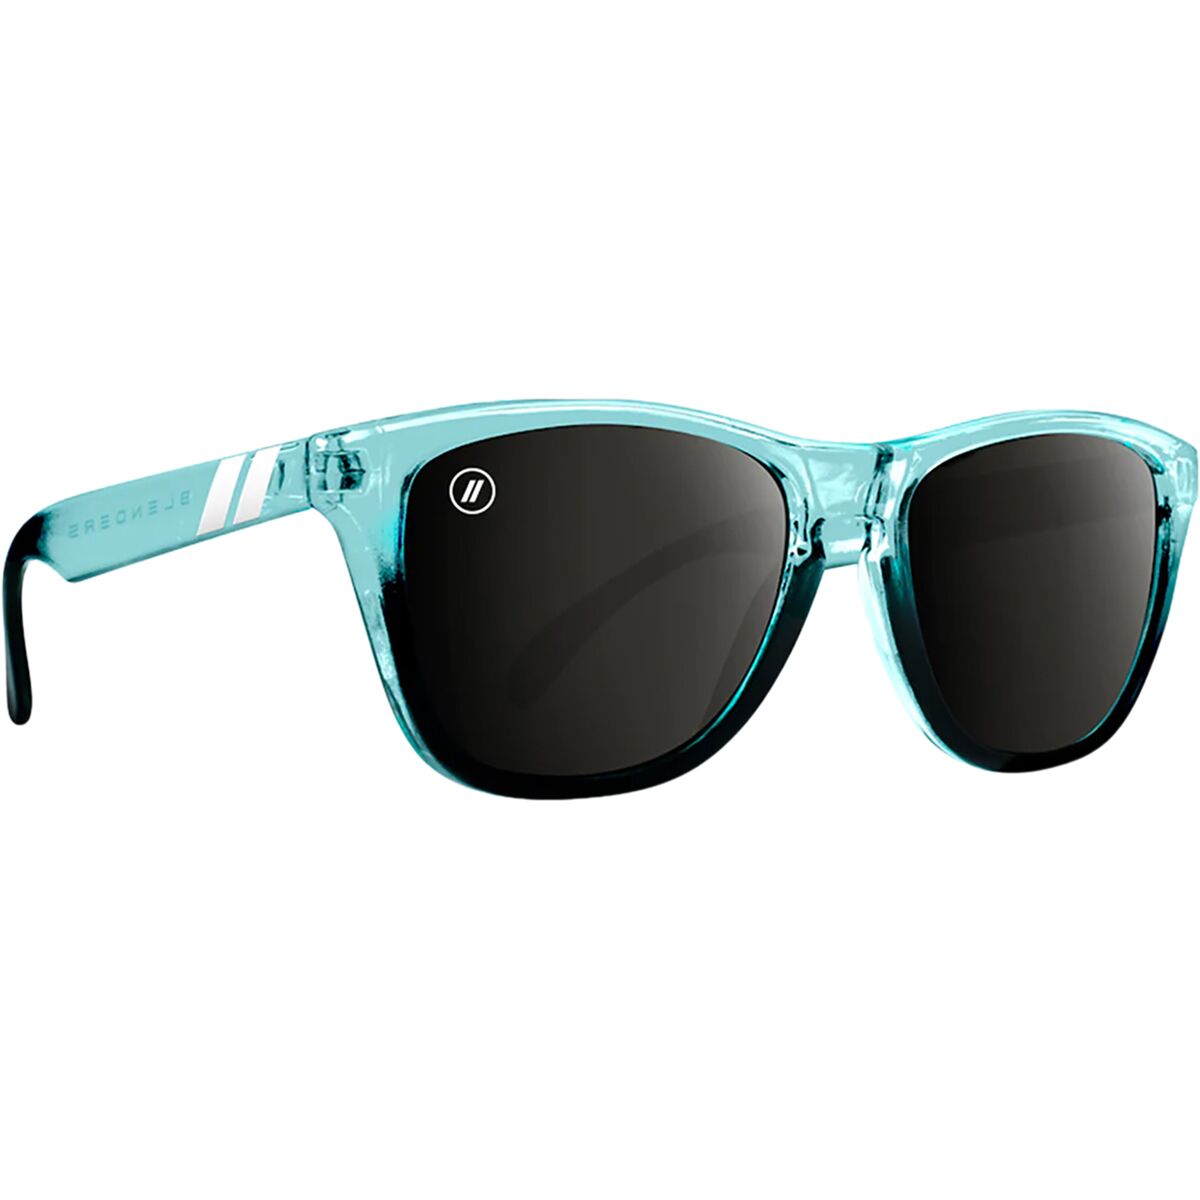 Blenders Eyewear L Series Polarized Sunglasses